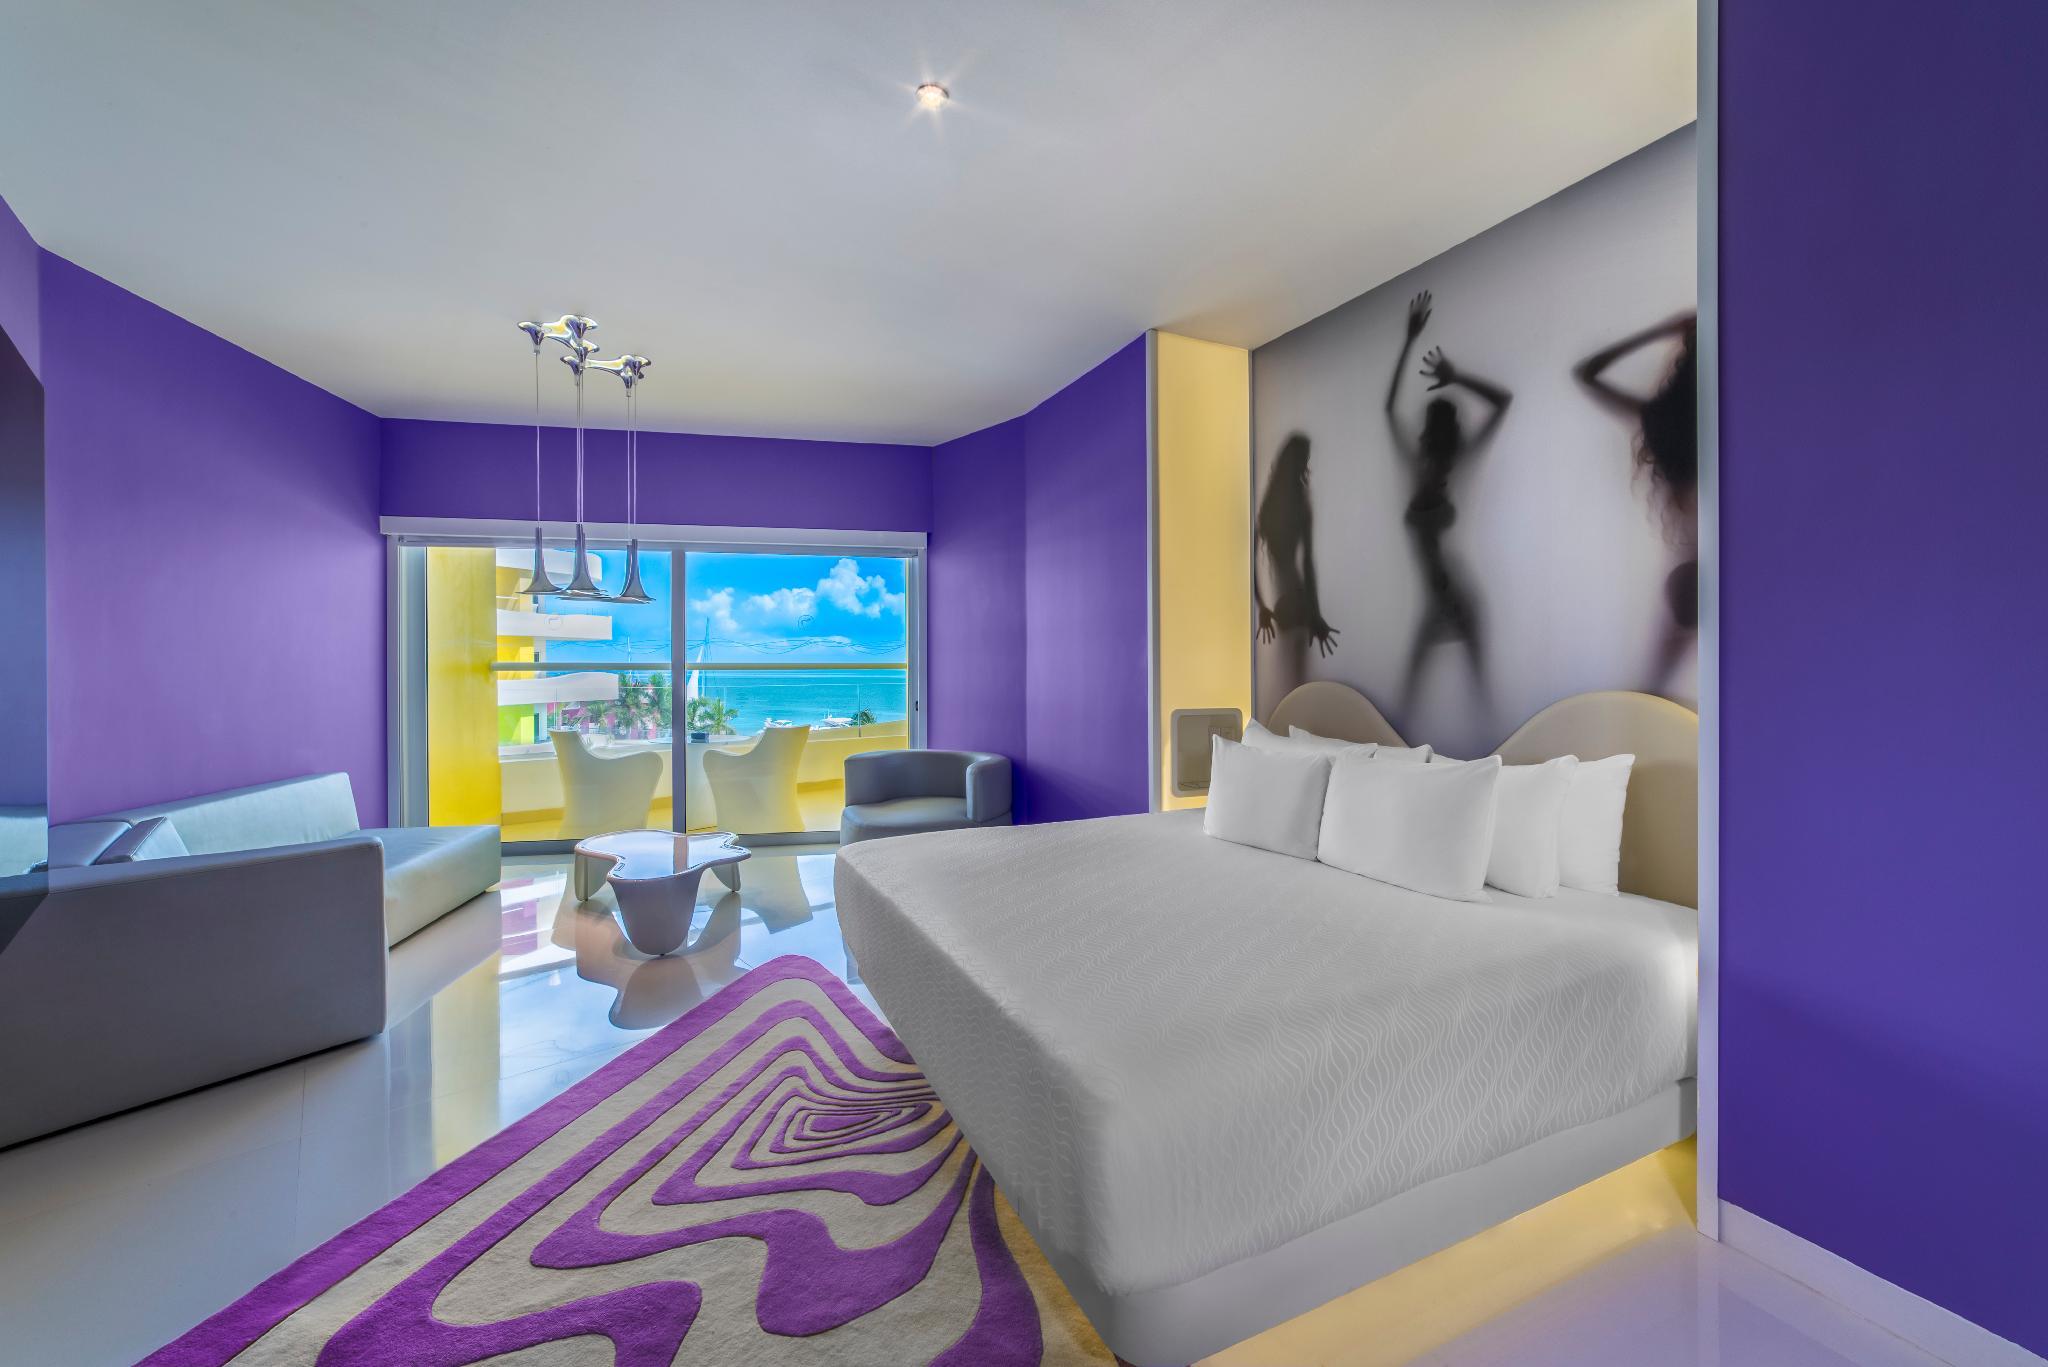 Rooms at Temptation Cancun resort